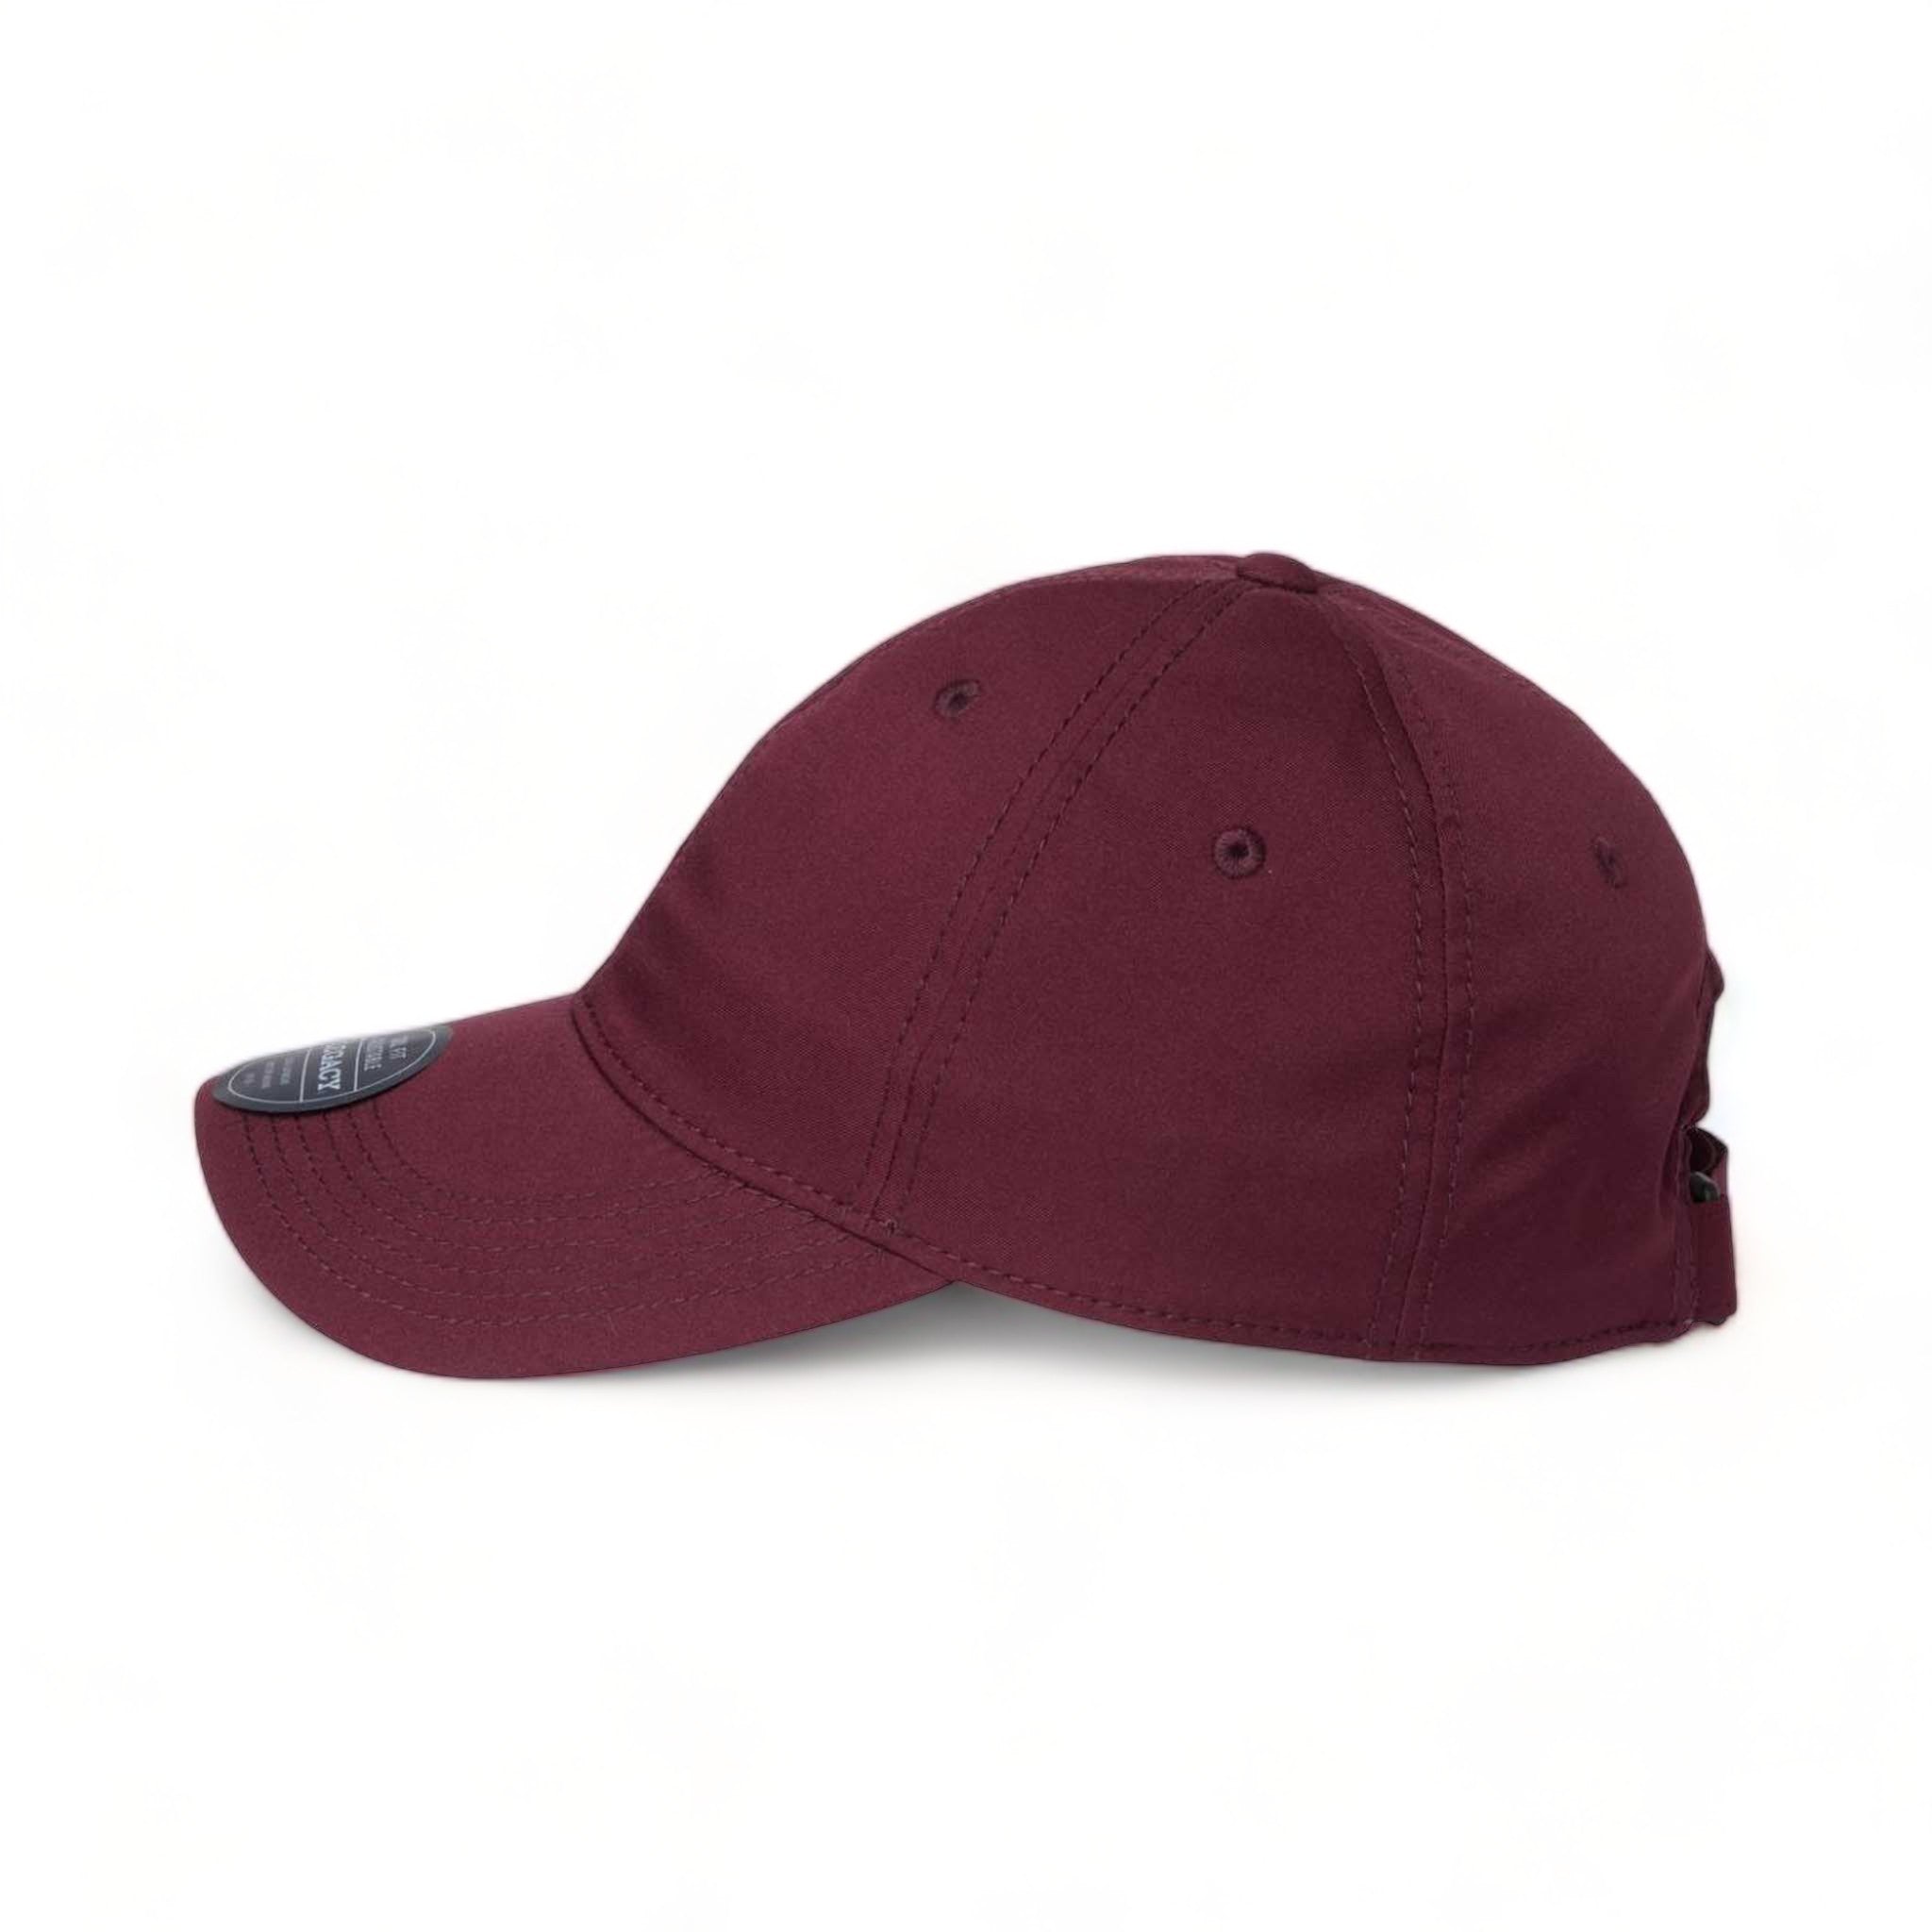 Side view of LEGACY CFA custom hat in burgundy